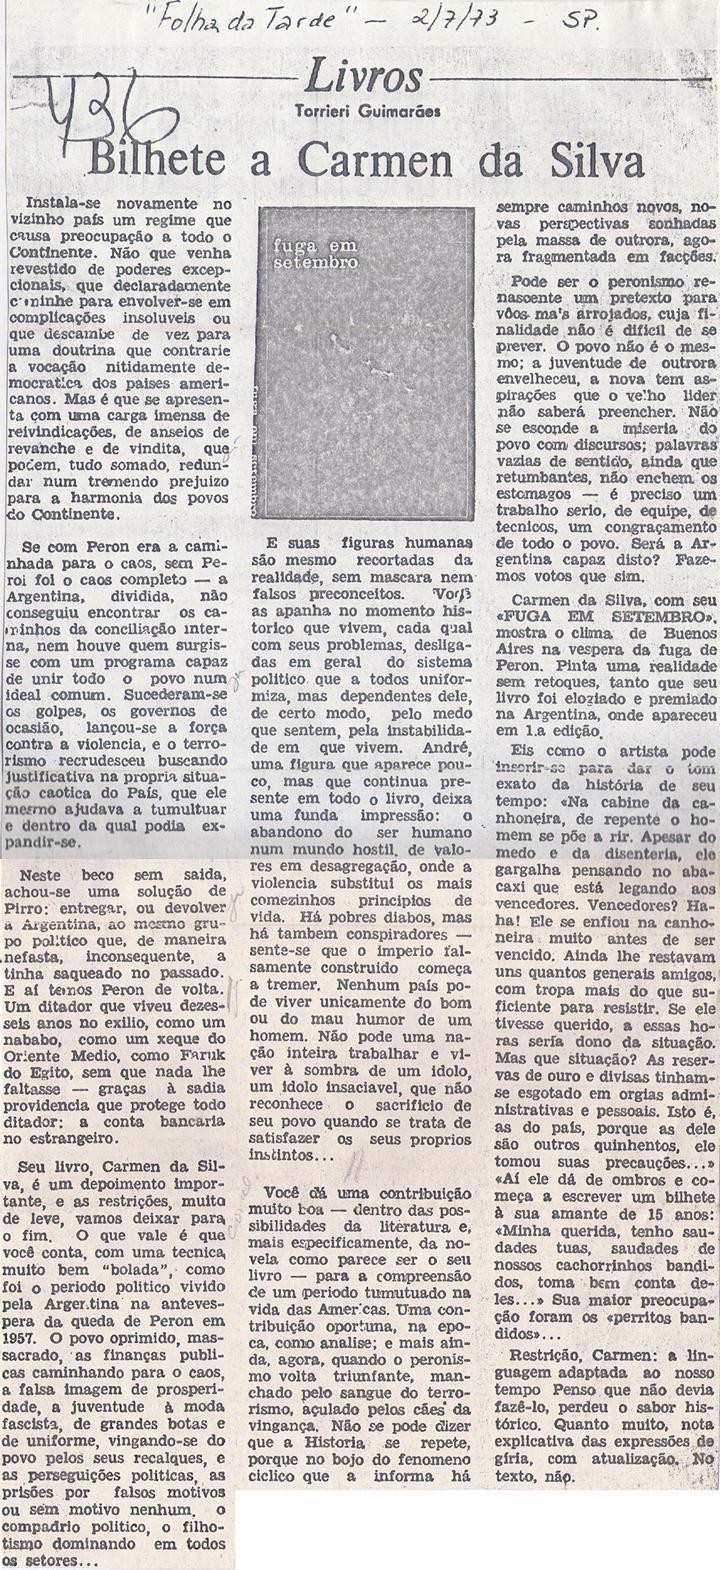 02 de Julho de 1973 - Folha da Tarde. Bilhete a Carmen da Silva.